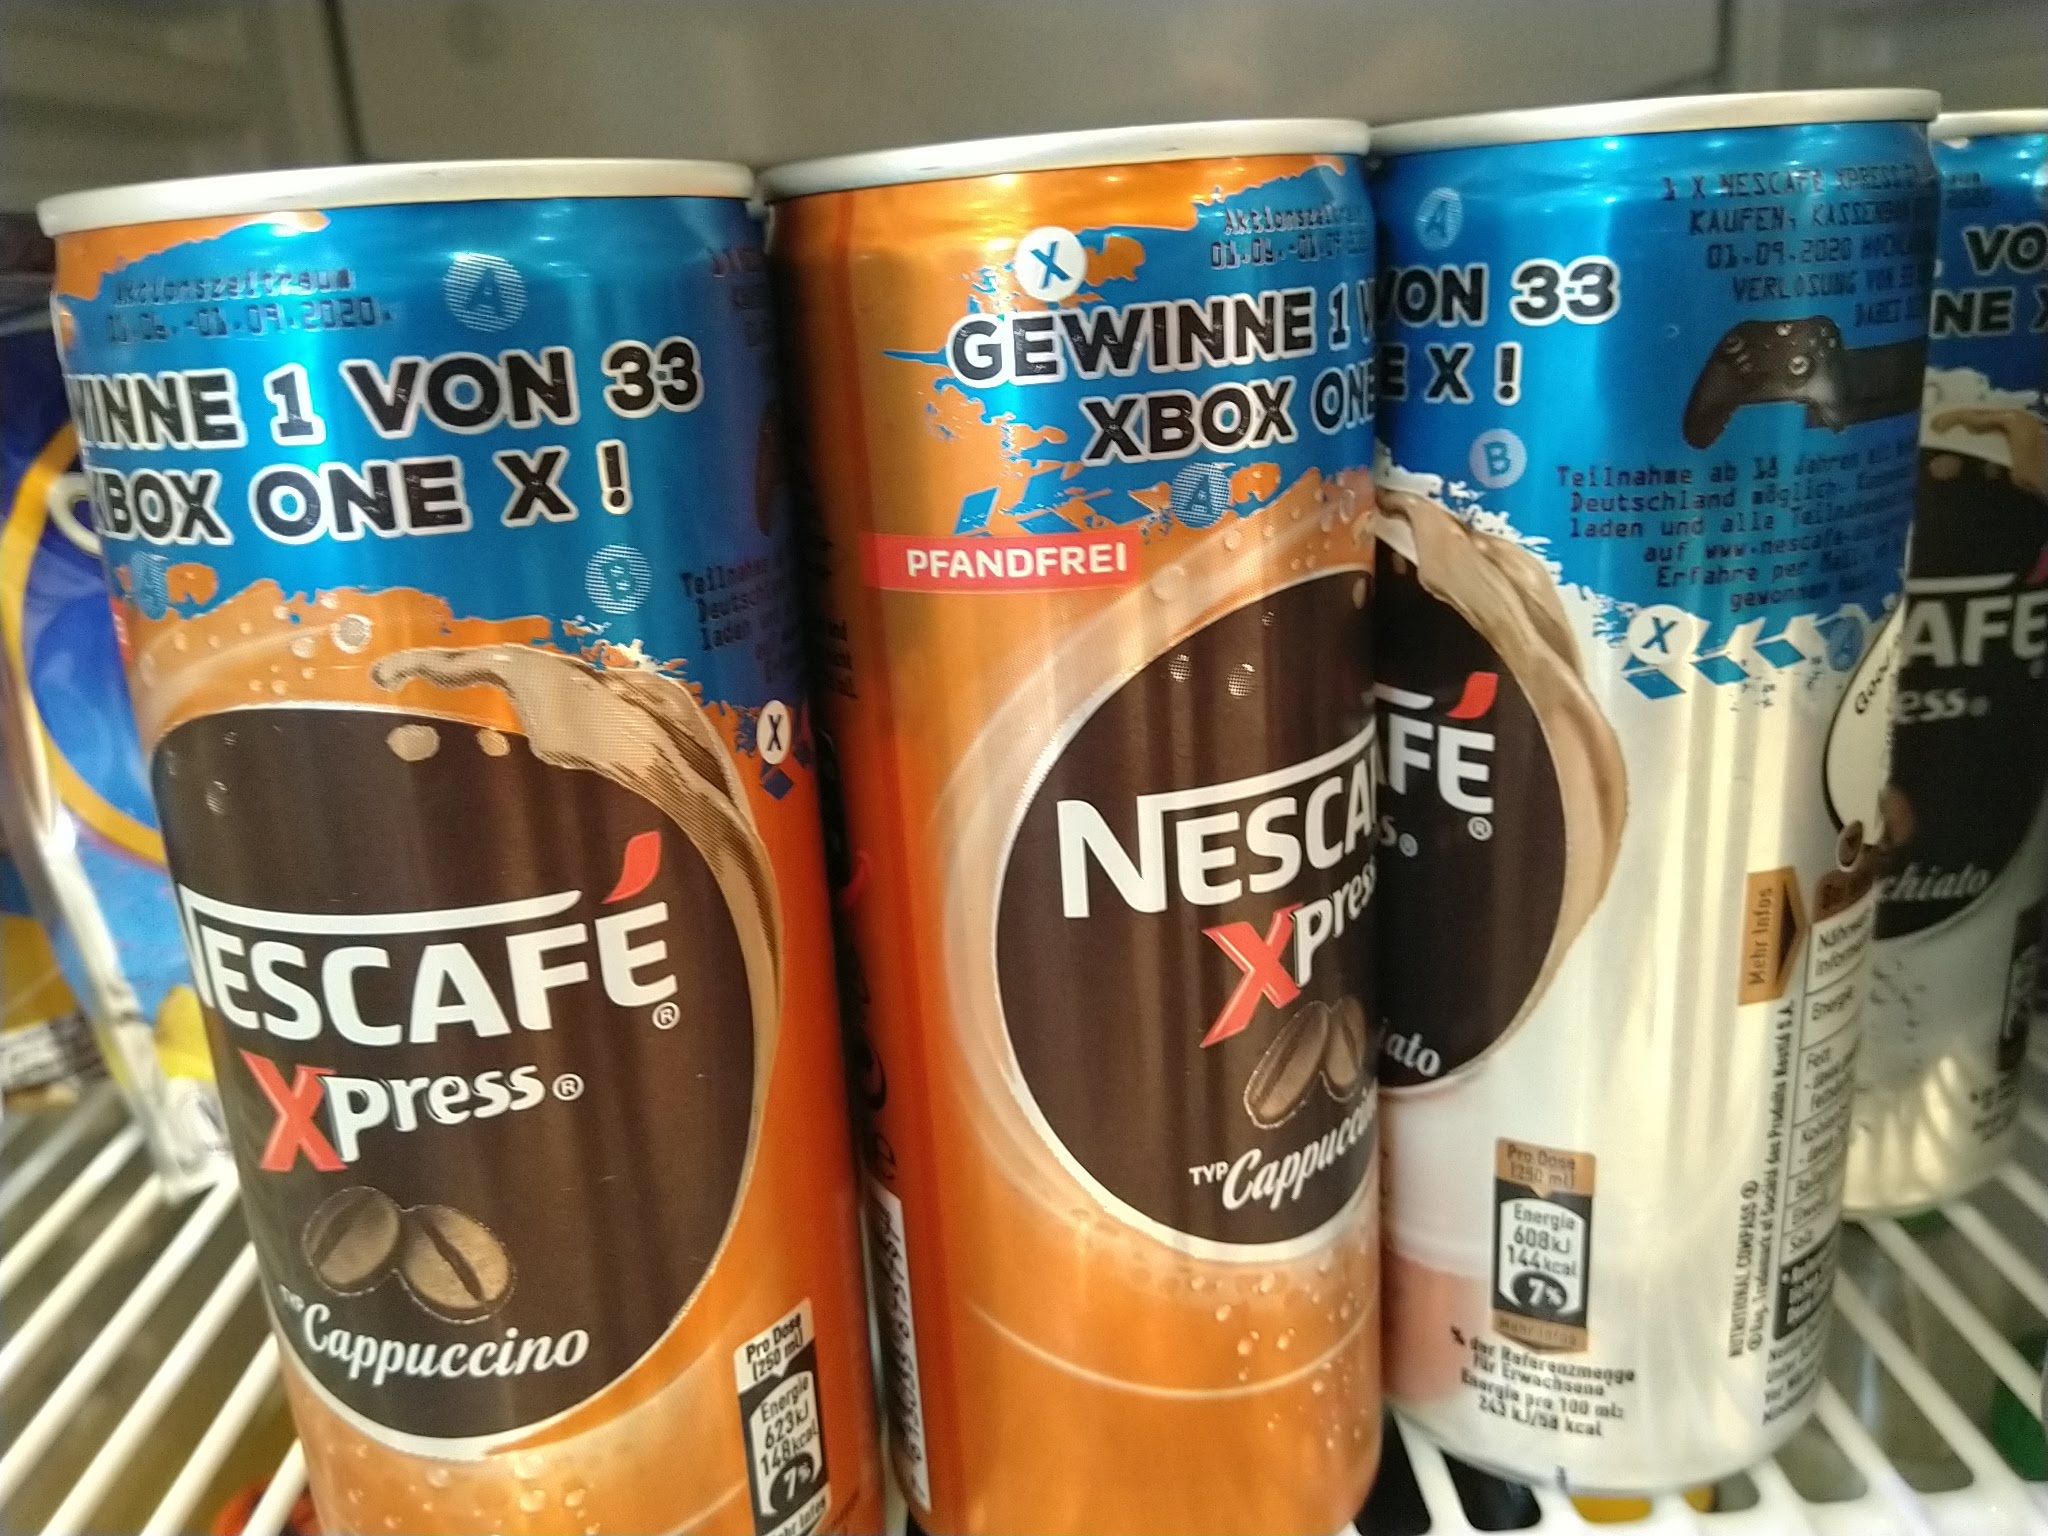 Nescafé Xpress Xbox One gewinnen